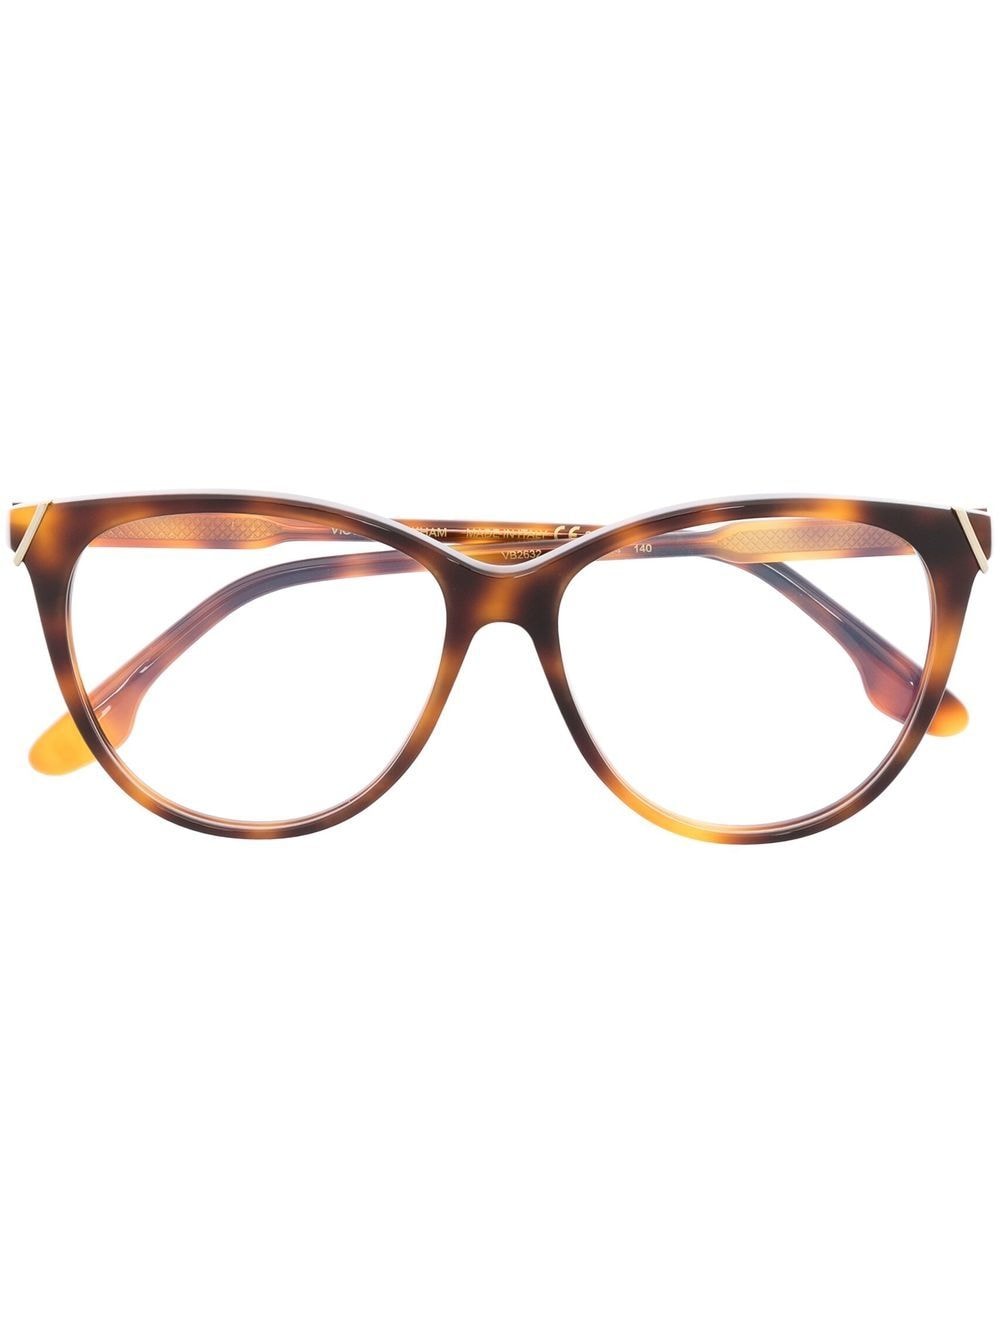 Victoria Beckham Cat-eye Tortoiseshell-effect Acetate Eyeglasses